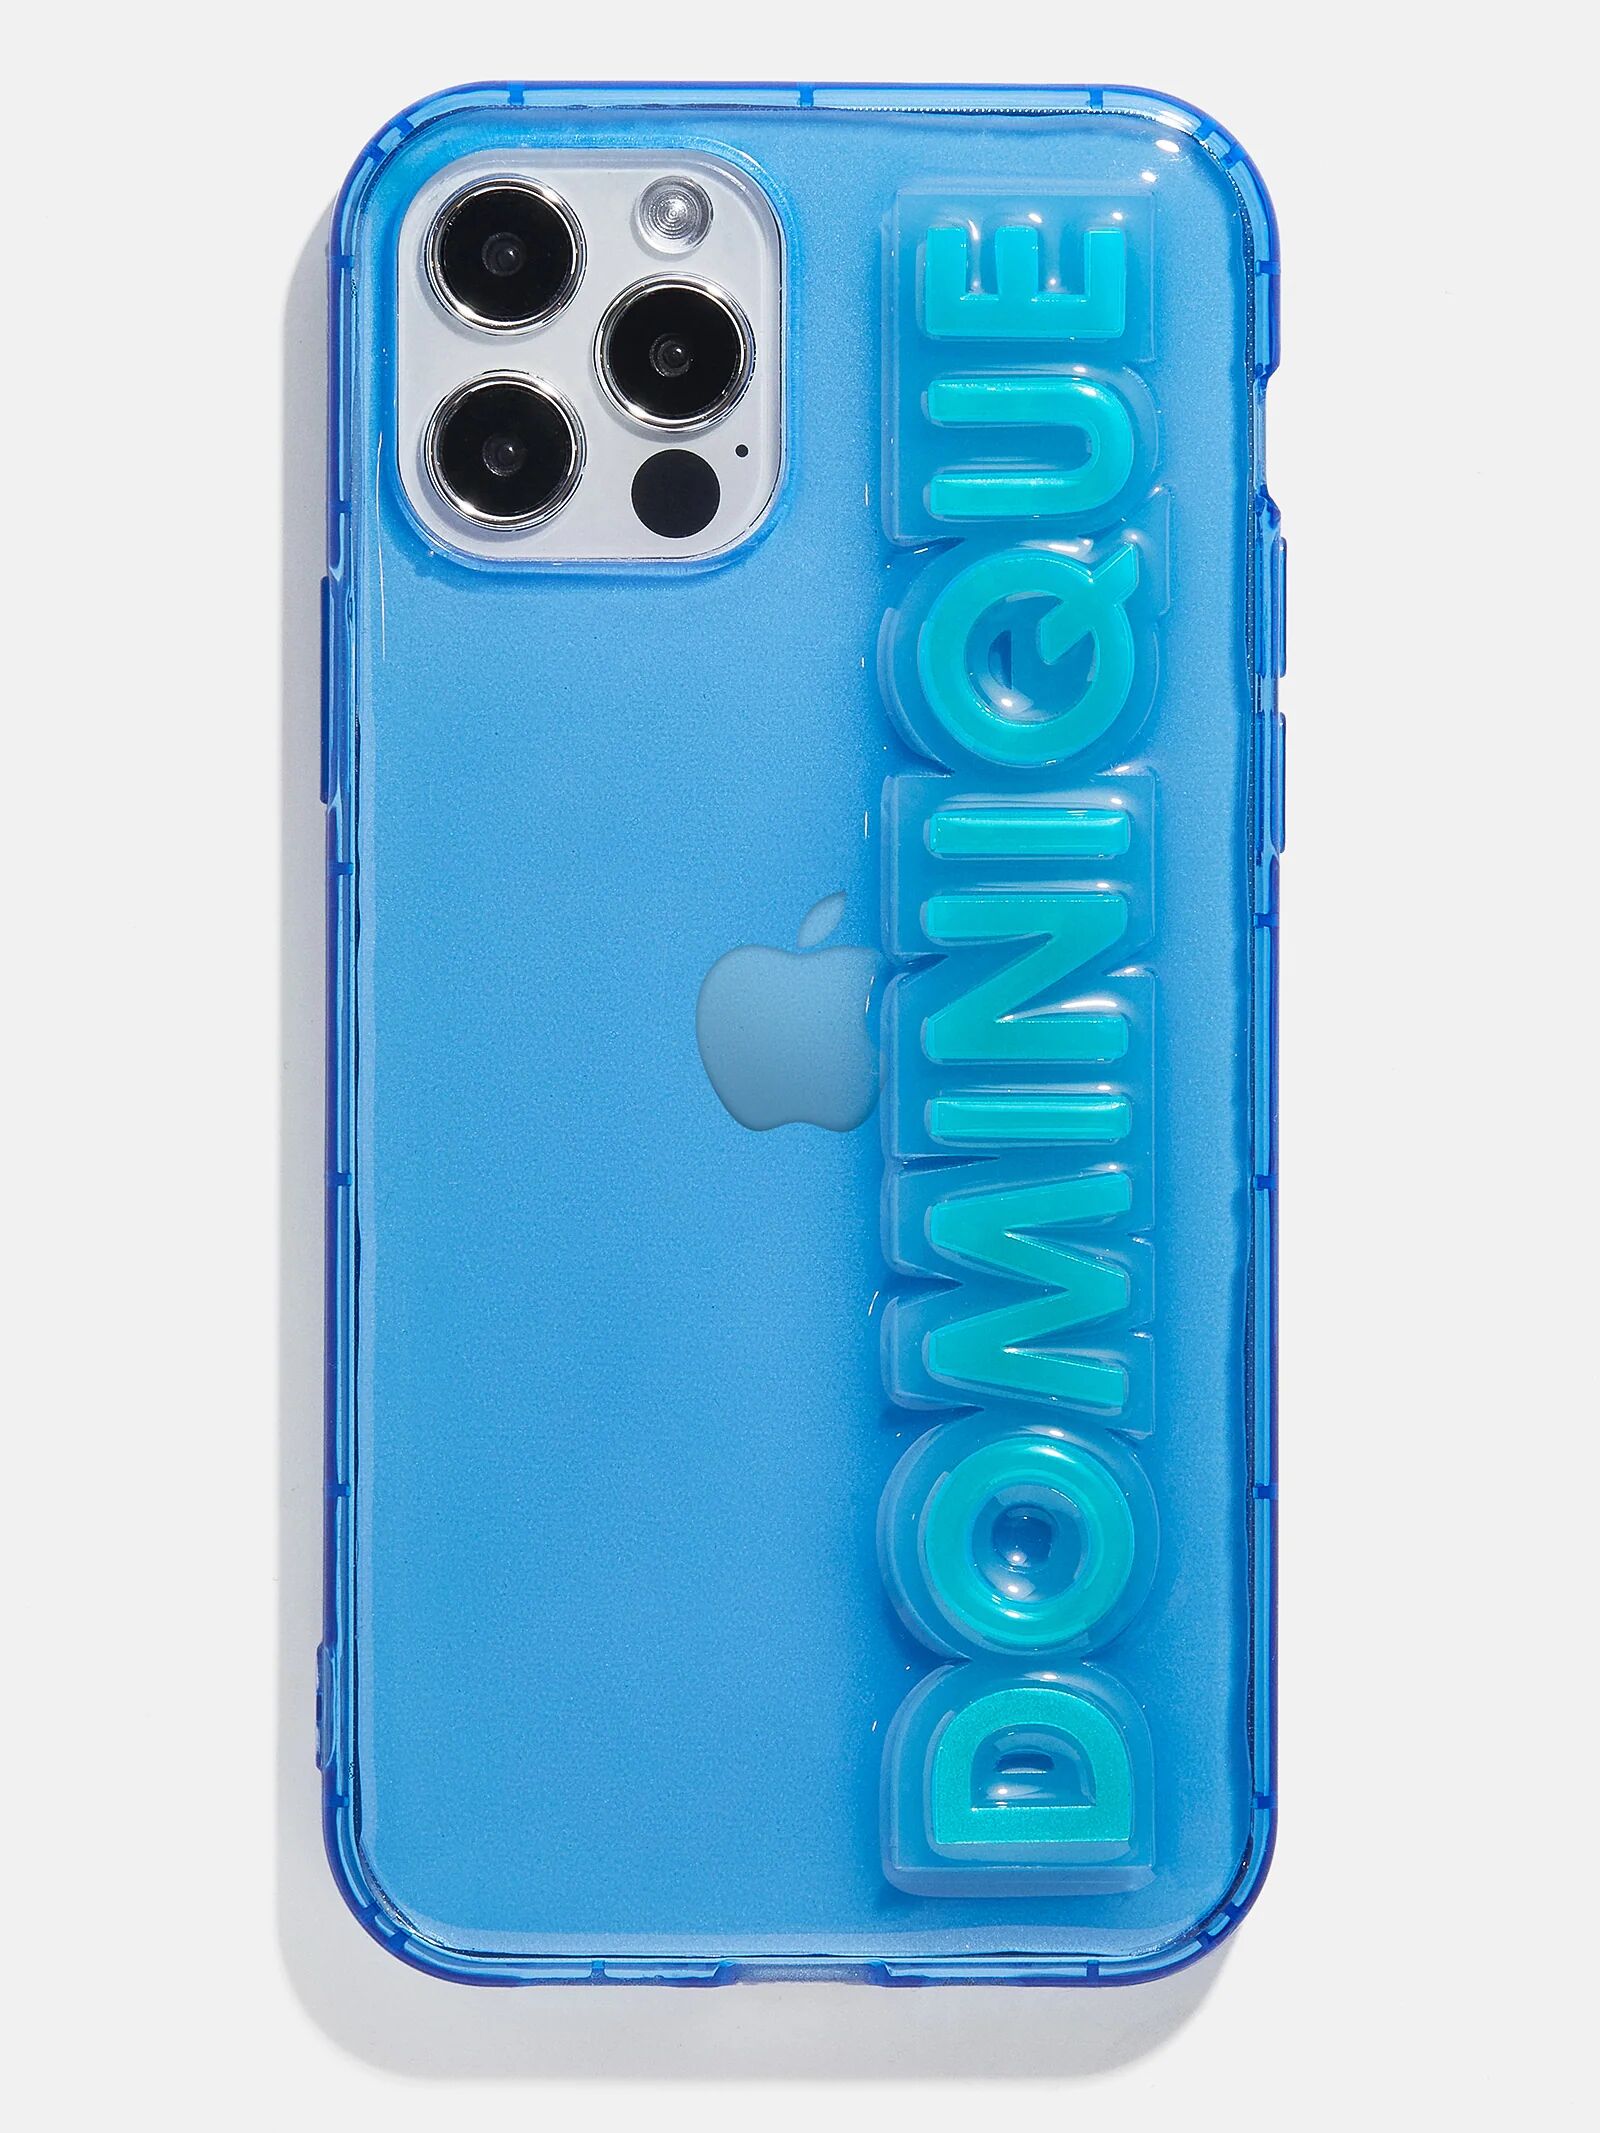 Baublebar Glow in the Dark Custom iPhone Case - Blue  - Size: iPhone 13 Pro Max